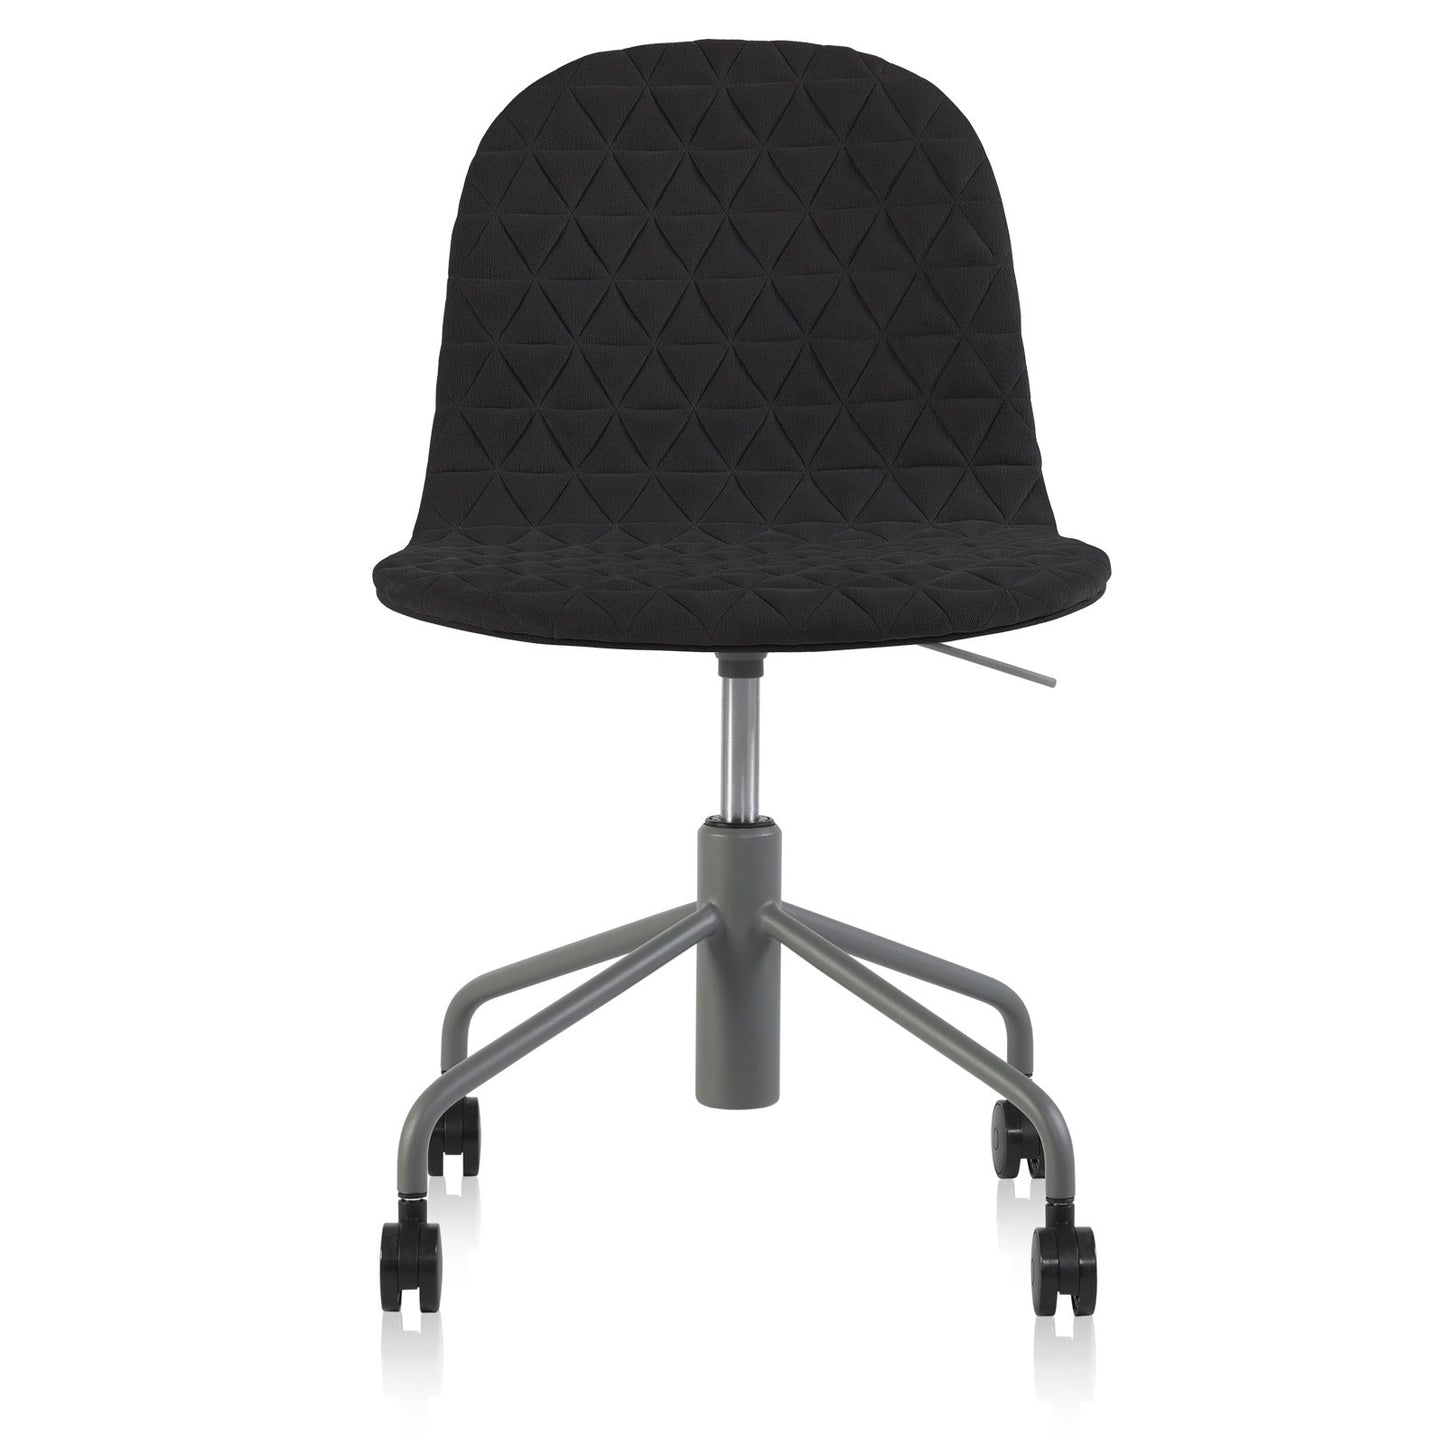 Chair Mannequin 06 - Black